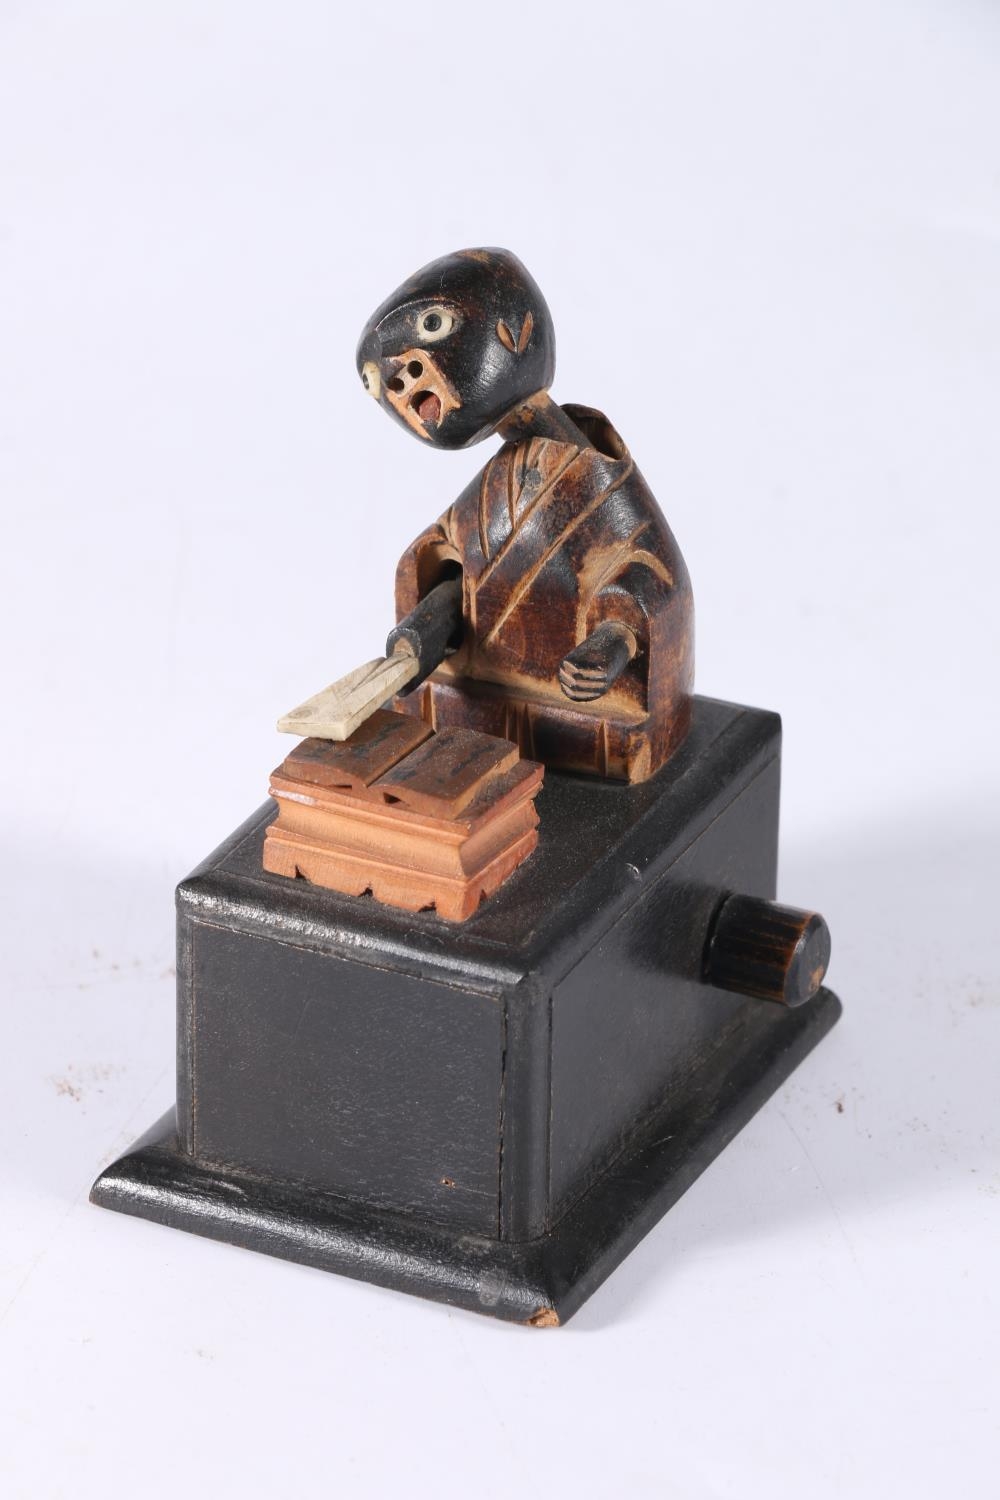 Japanese Kobe Toy treen automaton modelled as a headmaster shaking head and slamming paddle down